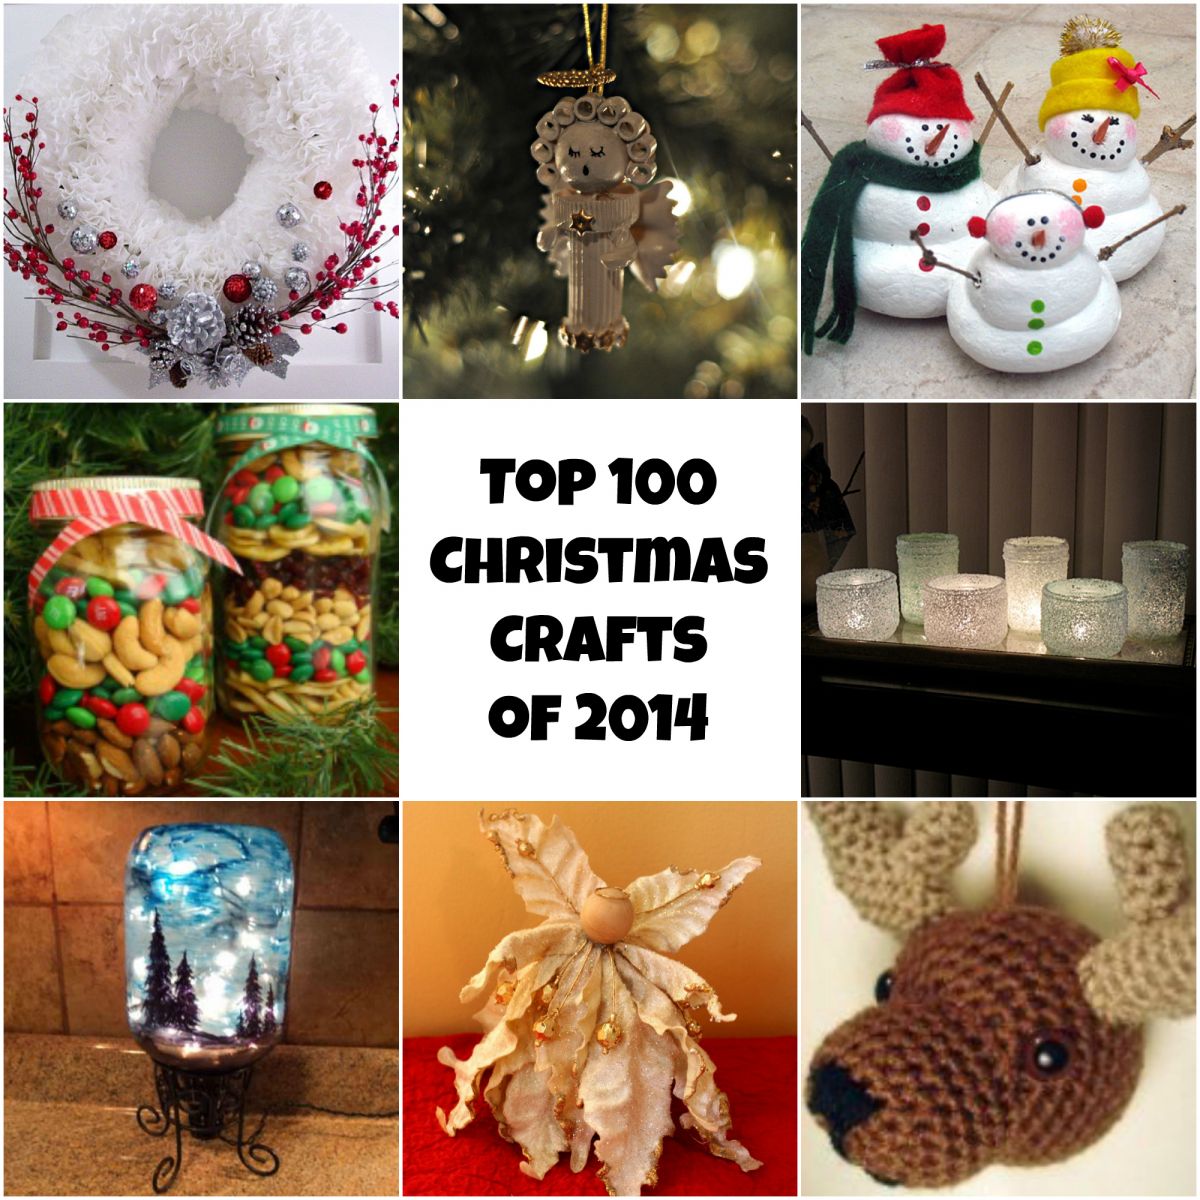 Top 100 DIY Christmas Crafts of 2013: DIY Christmas Ornaments, Homemade Christmas Decorations, DIY Christmas Gifts, and More